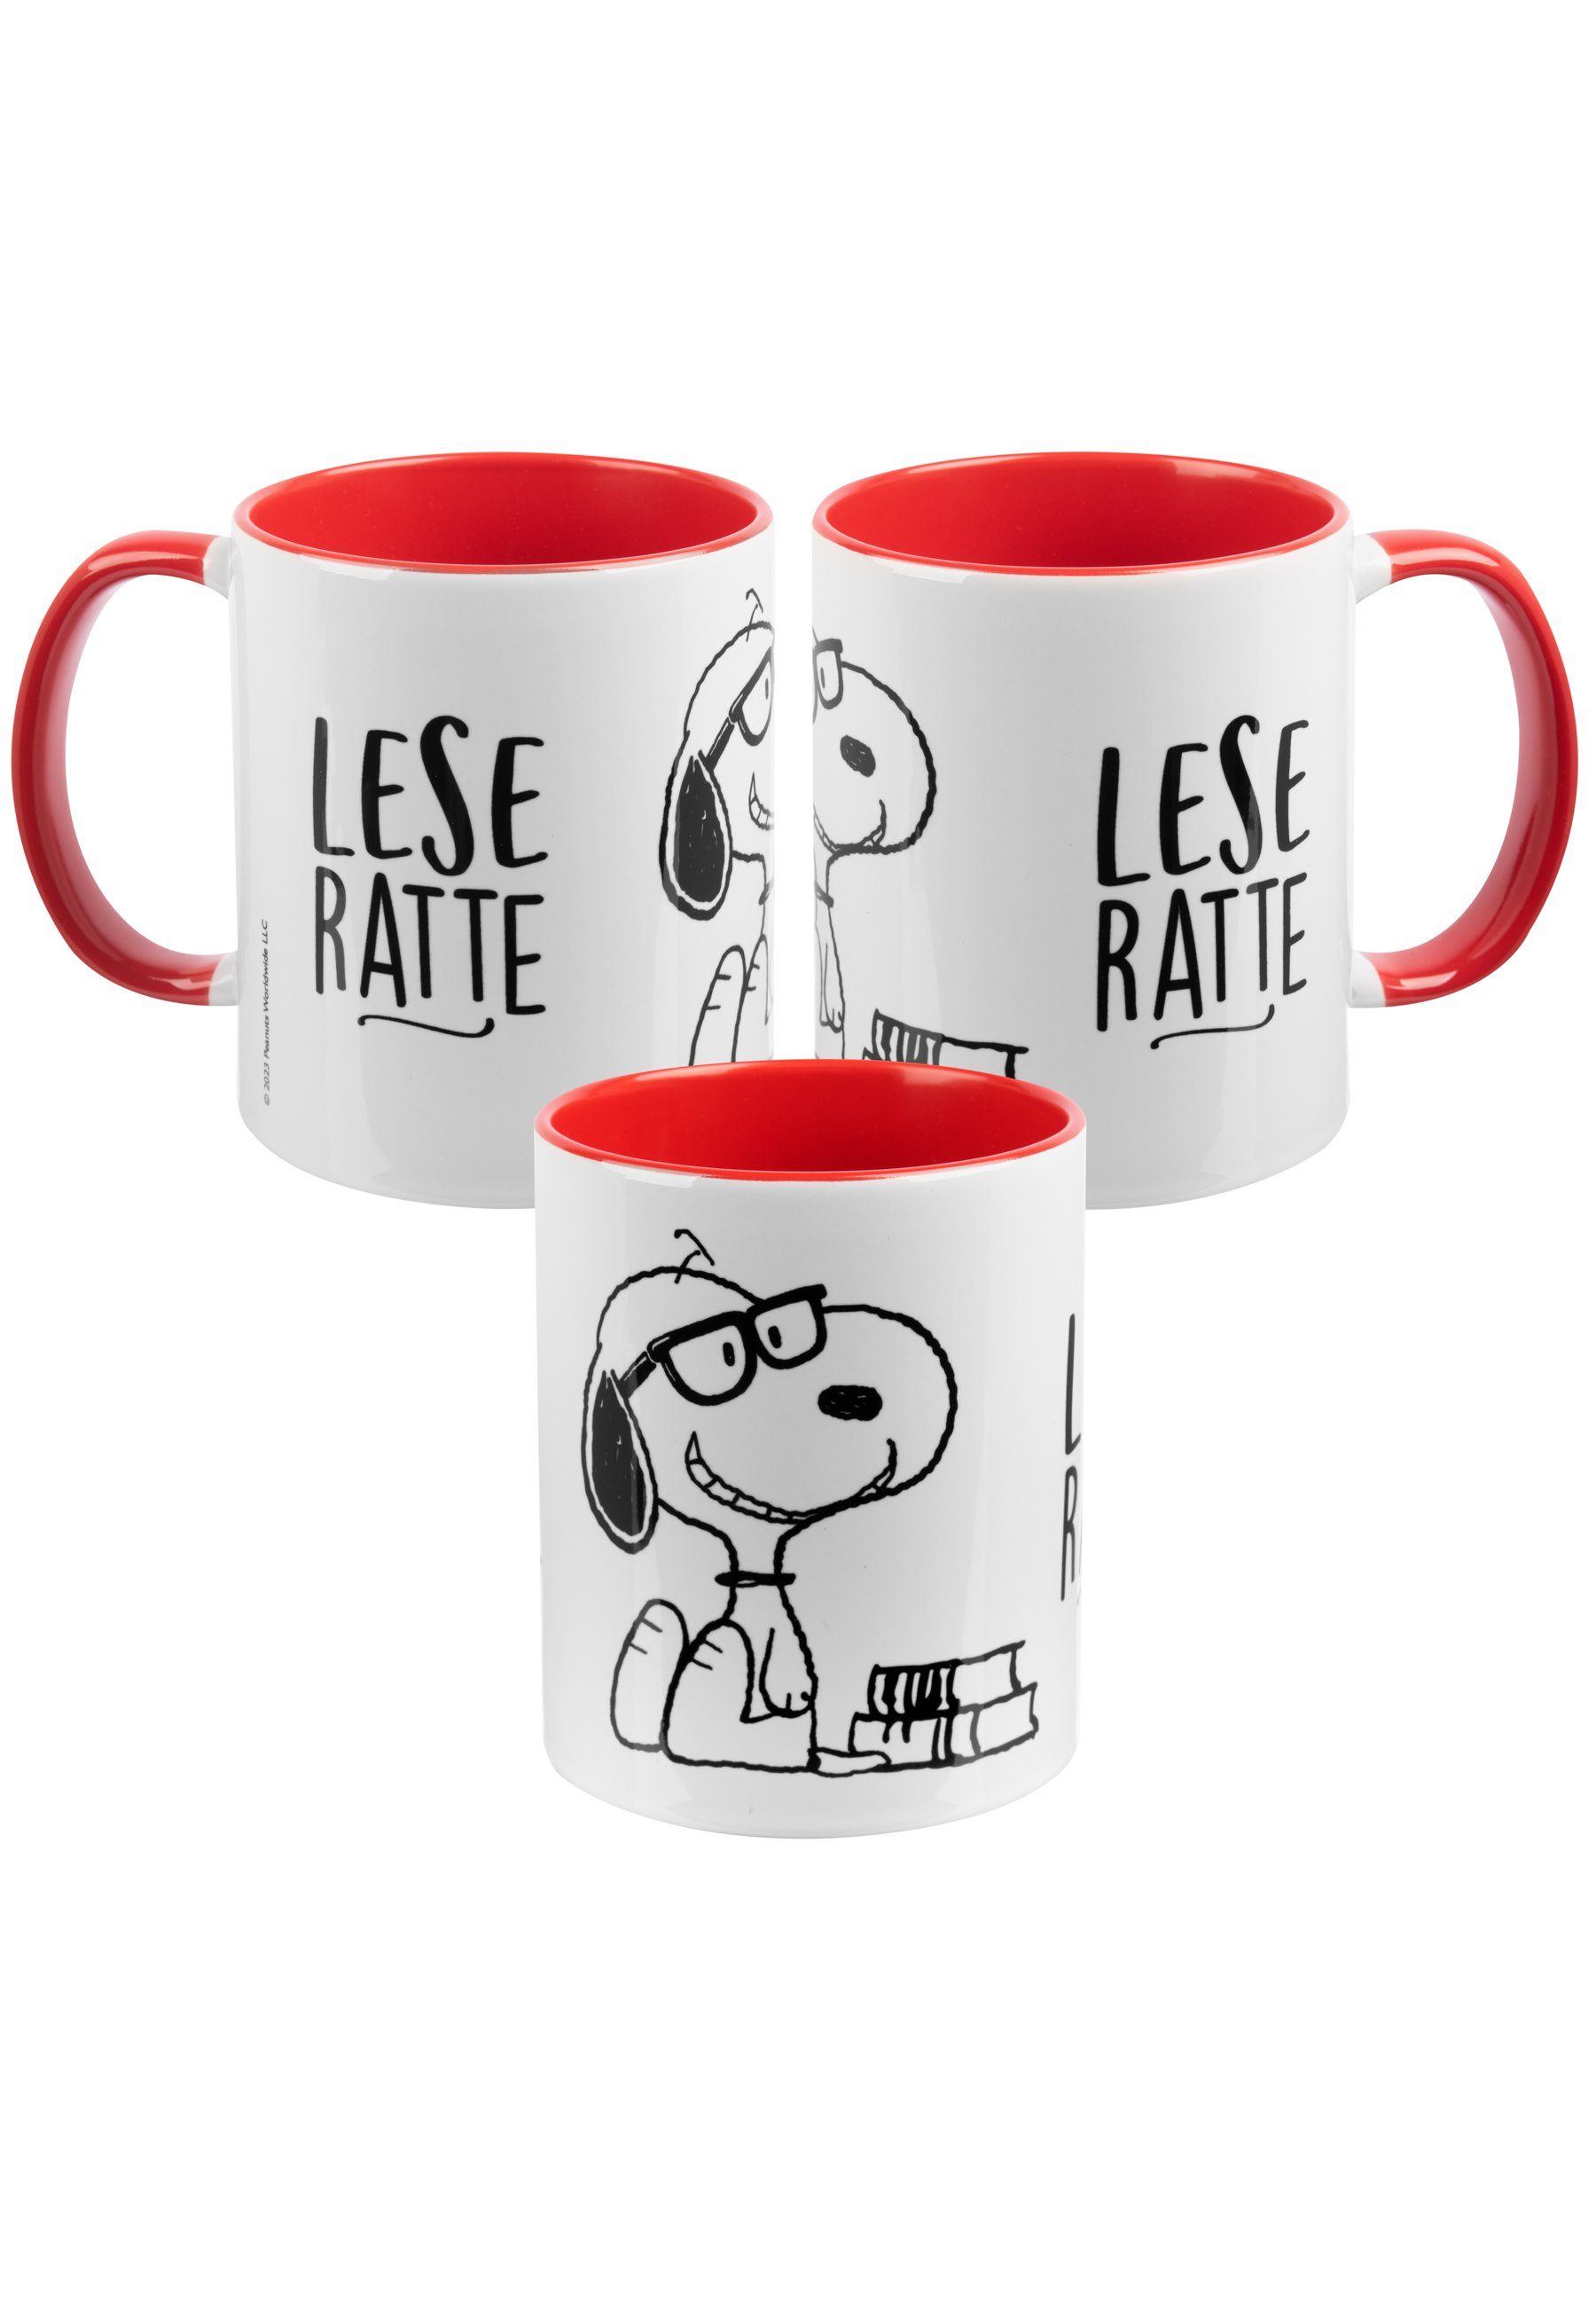 United Labels® Tasse The Peanuts Tasse Snoopy - Leseratte Kaffeetasse Rot Weiß 320 ml, Keramik